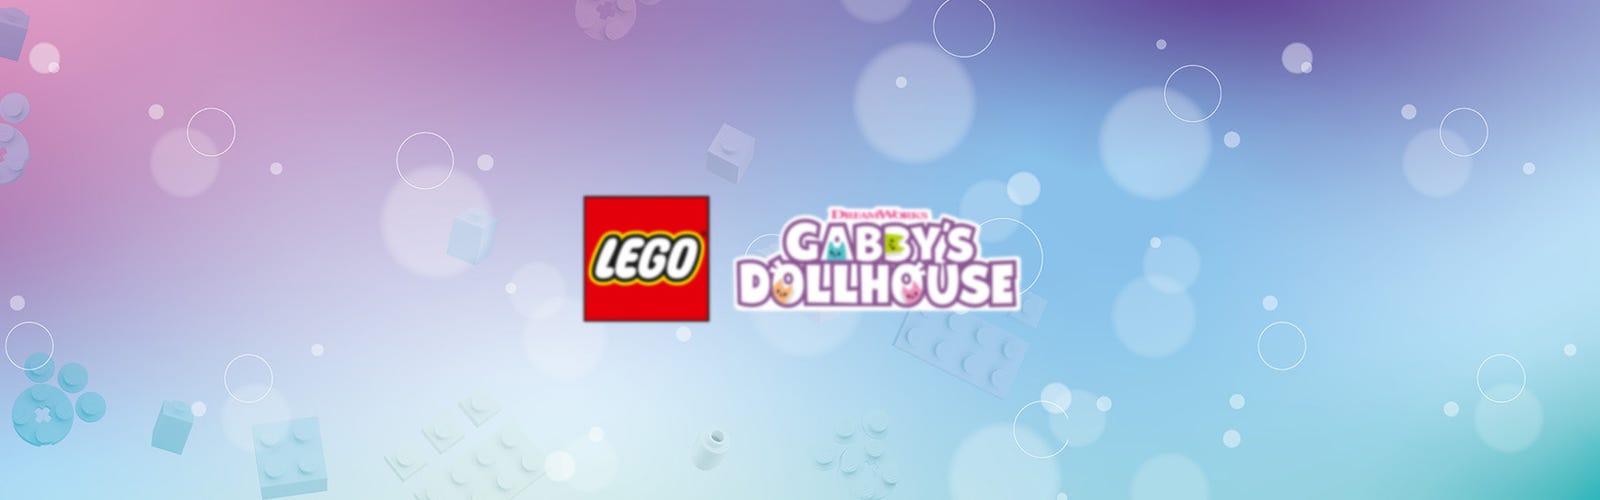 LEGO 6440116 ELEMENT DE DECOR GABBY DOLLHOUSE 10788